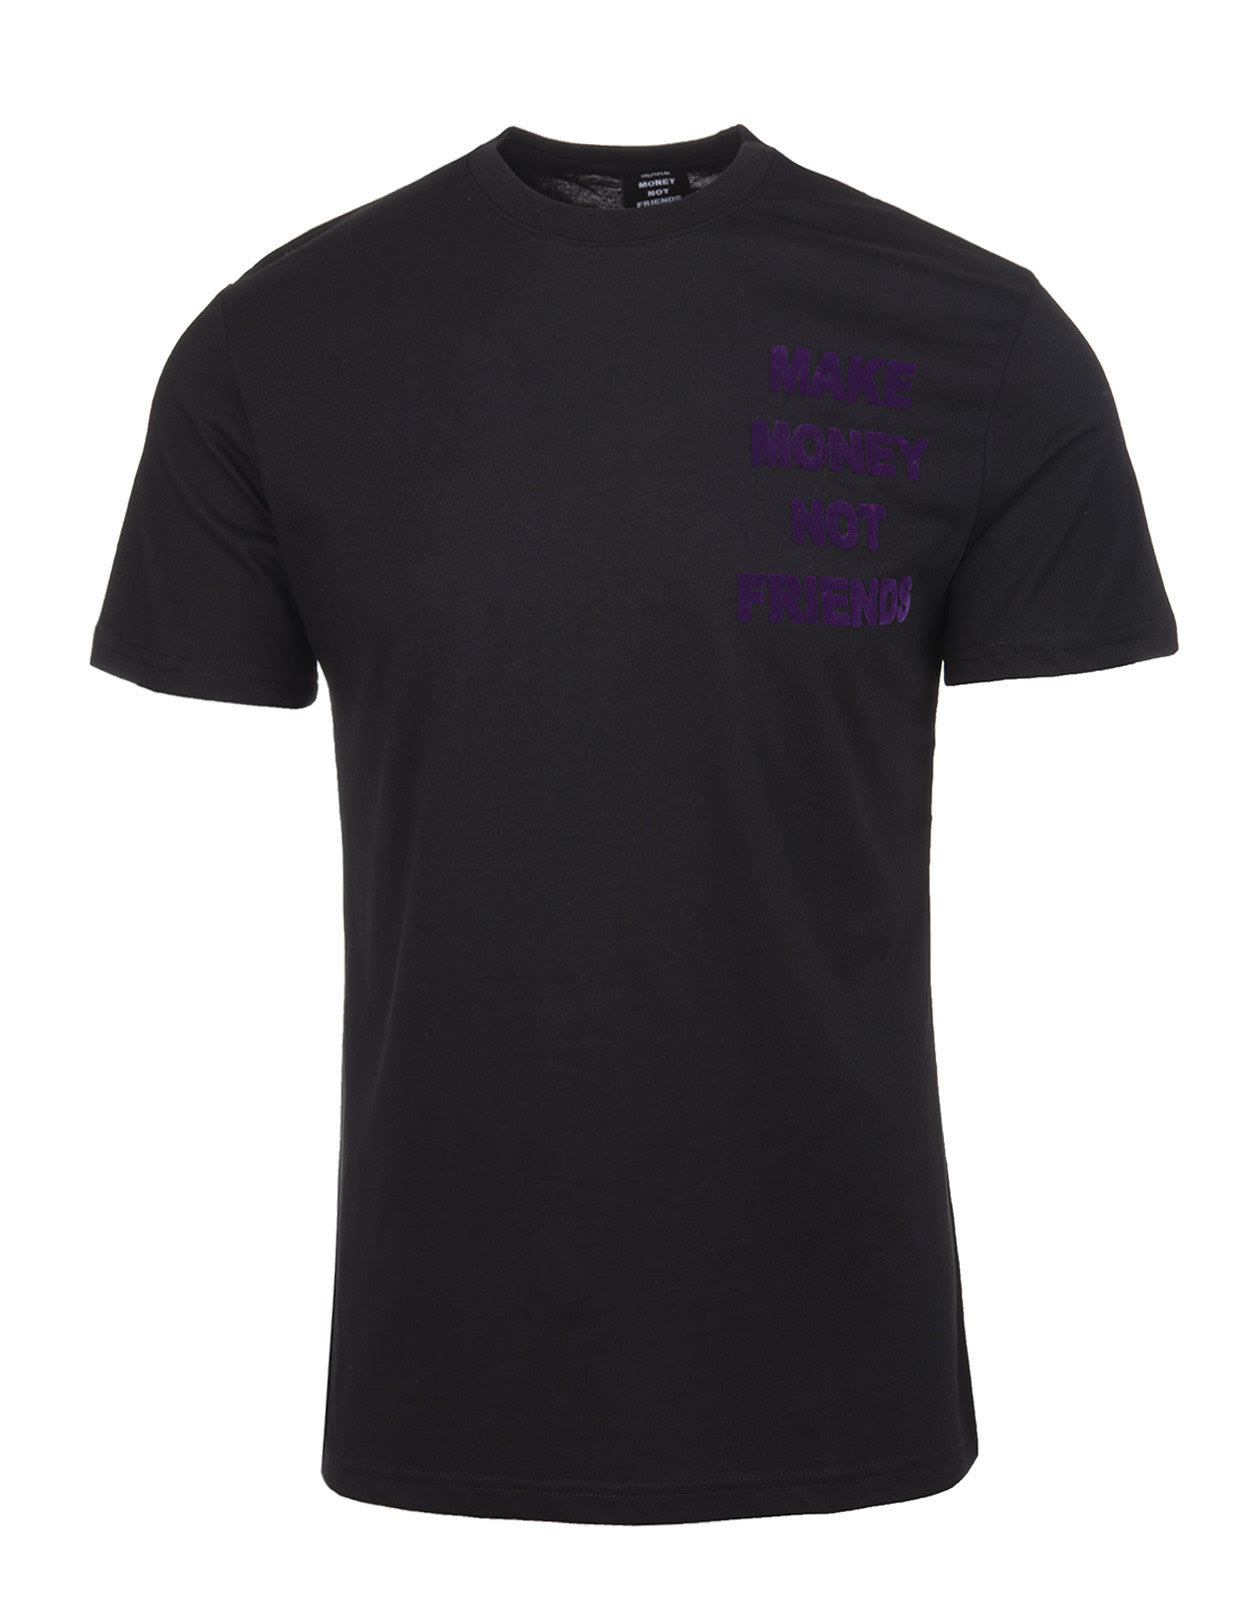 Make Money Not Friends Black T-shirt With Front And Back Velvet Effect Purple Logo